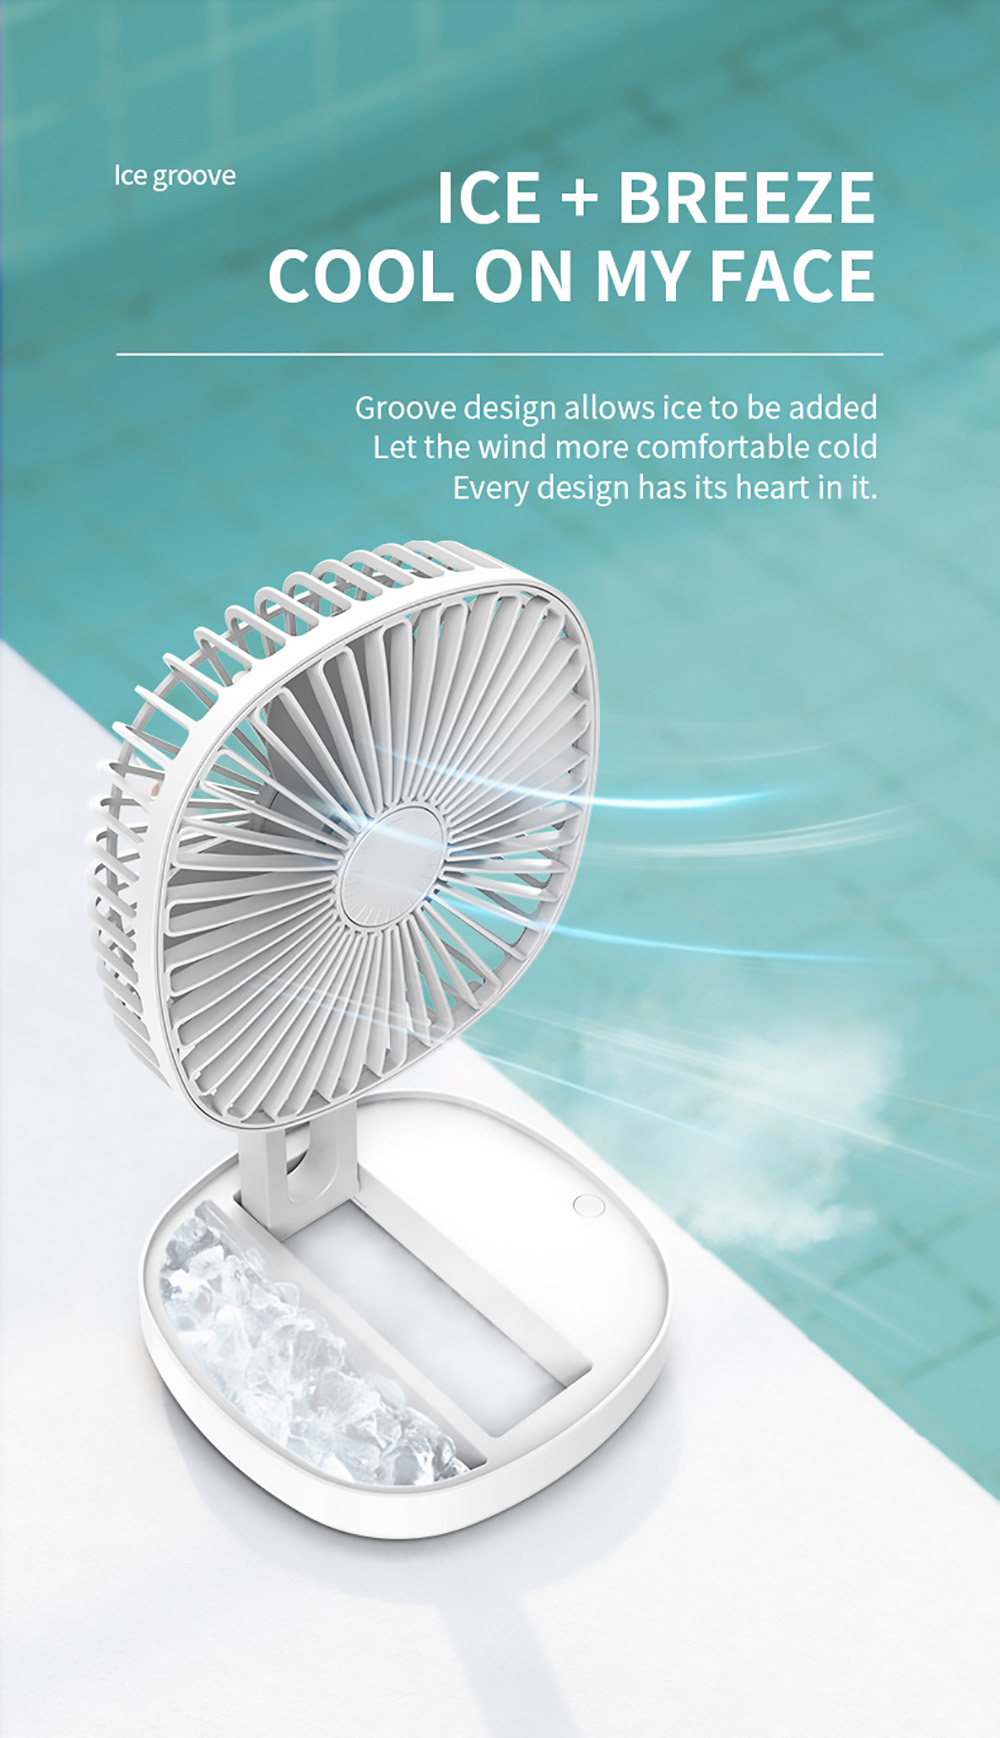 Multifunction Folding Fan, 3 Levels Speed, Aromatherapy Cooling Fan, 1200mAh Battery, USB Charging, Low Noise - Grey